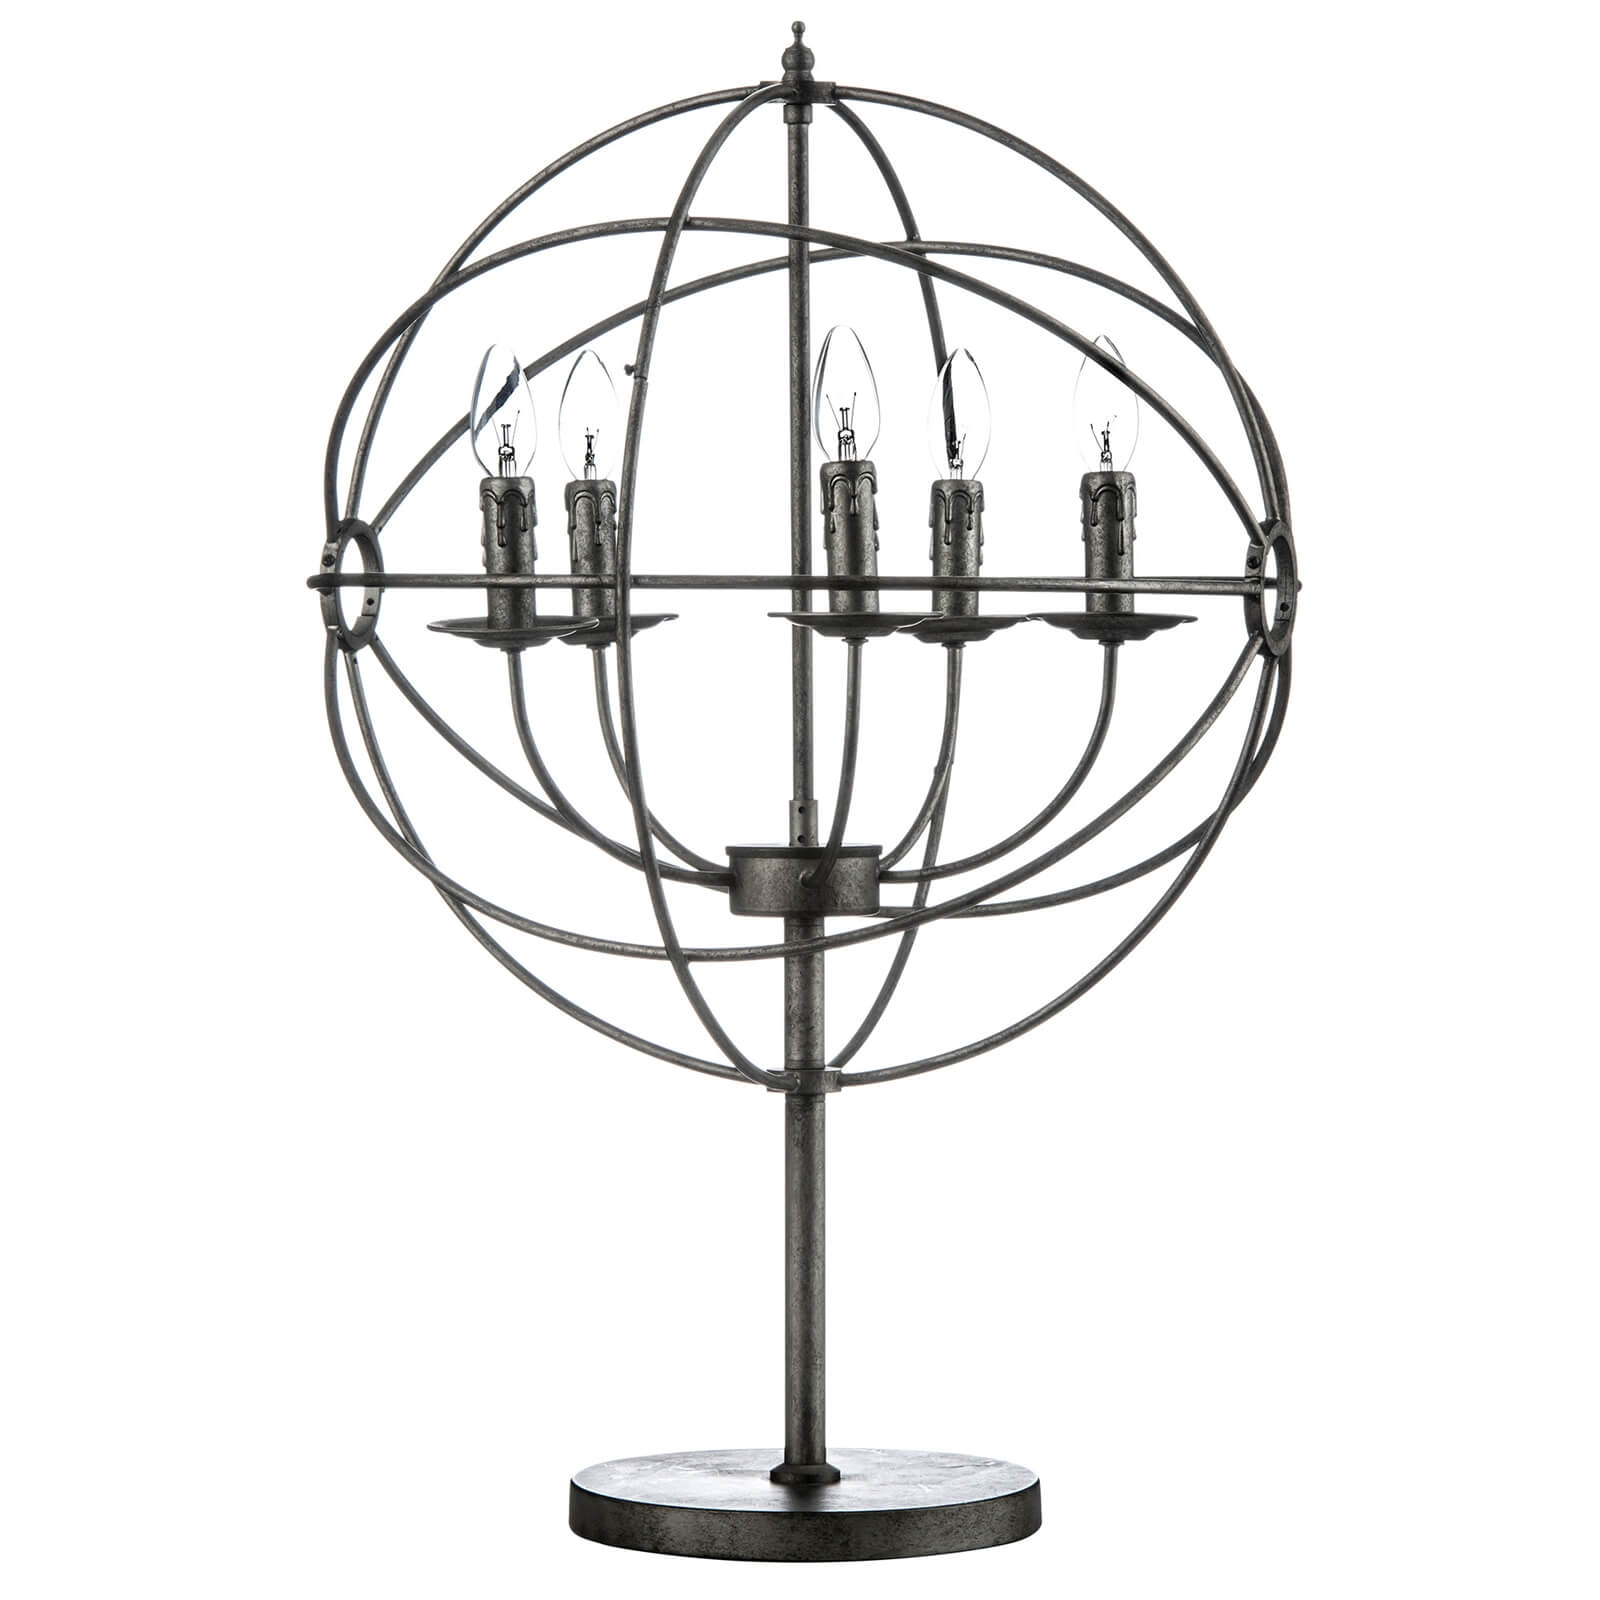 Orbital 5 Arm Table Lamp